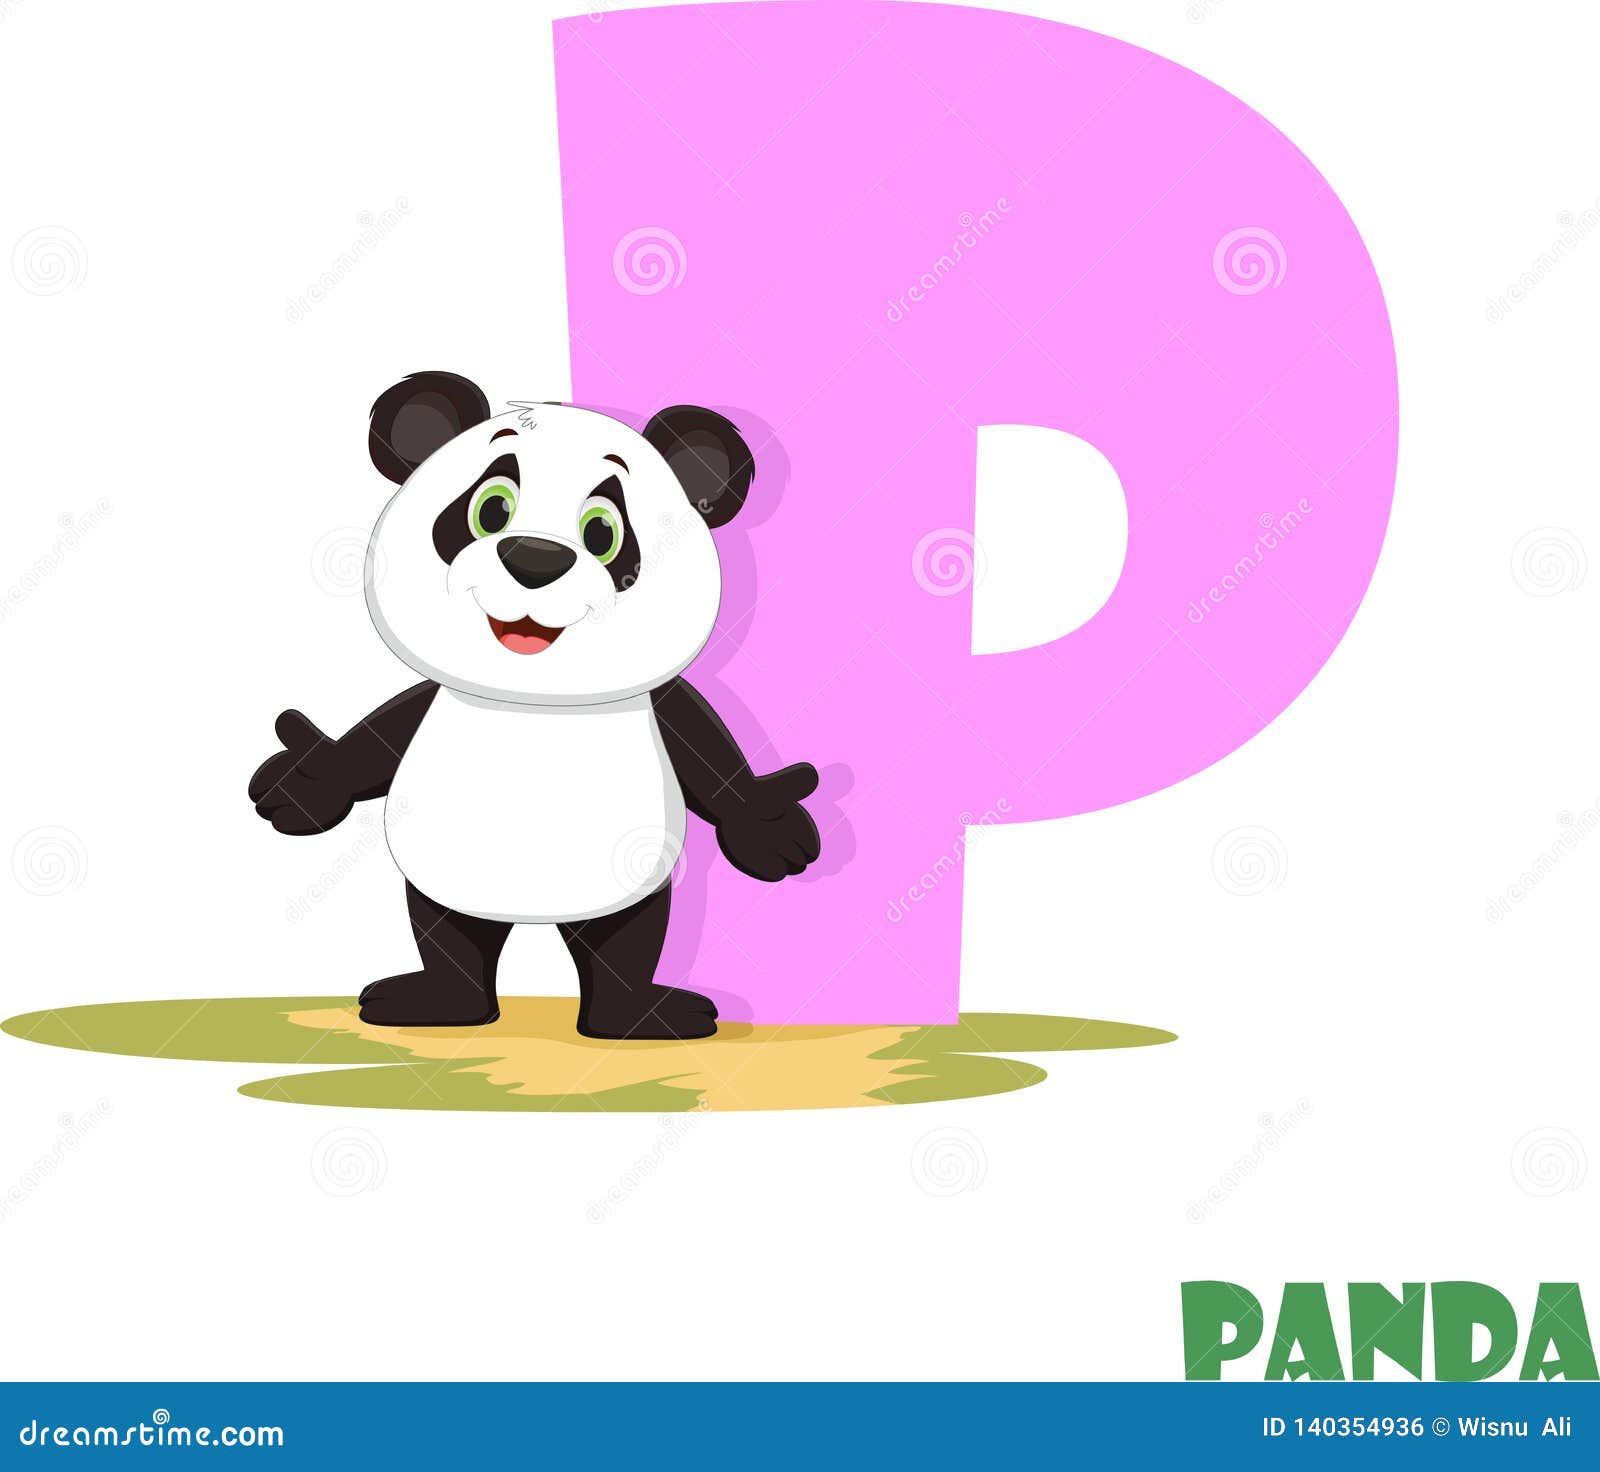 Cute Animal Zoo Alphabet Letter P For Panda Stock Vector Illustration Of Animal Design